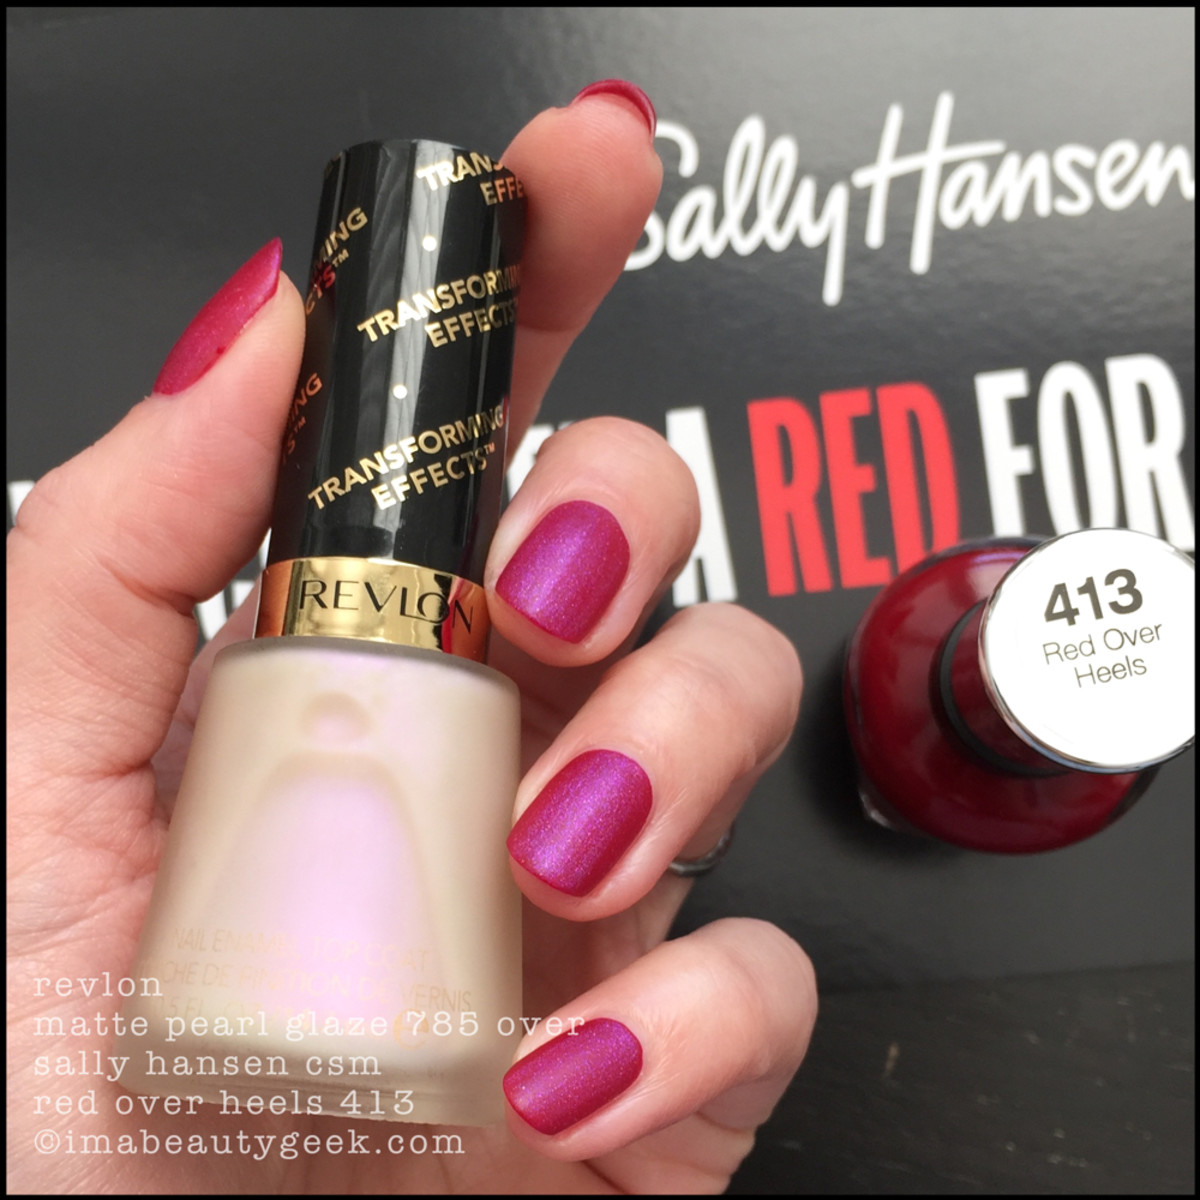 Sally Hansen Red Over Heels 413 w Revlon Matte Pearl Glaze - Red/esign Collection 2018